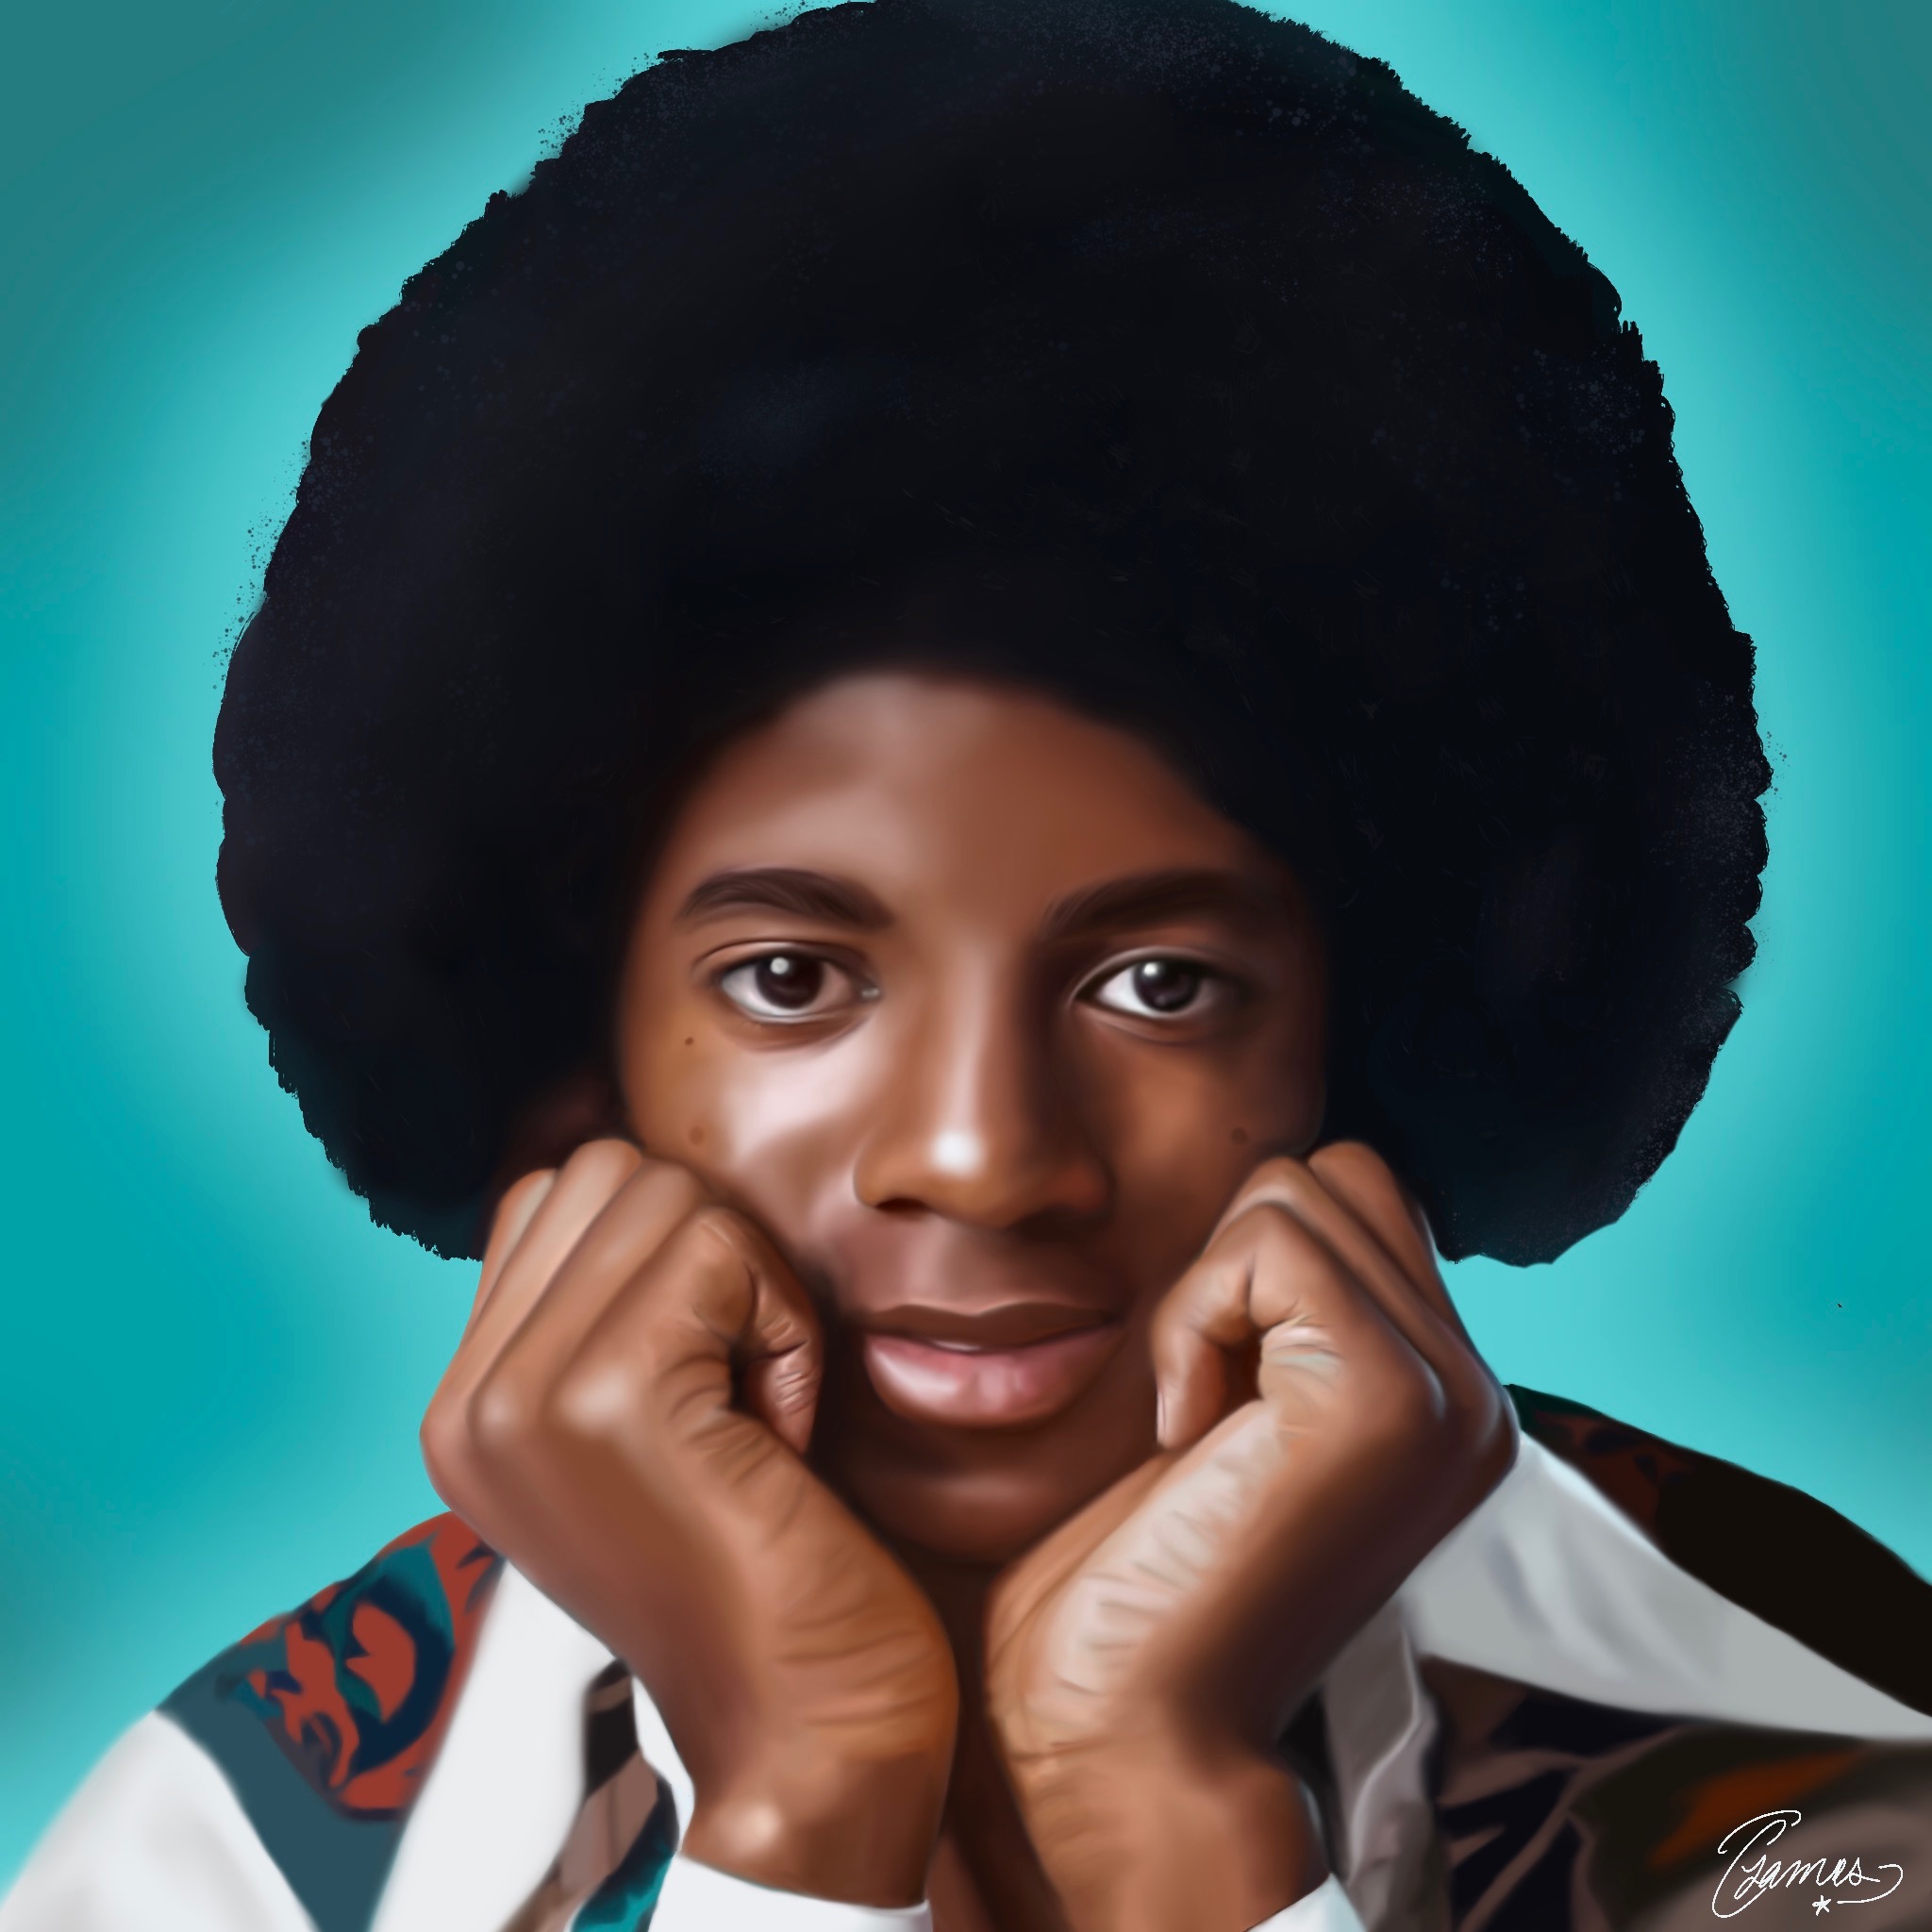 Jackson 5 Era Digital Art